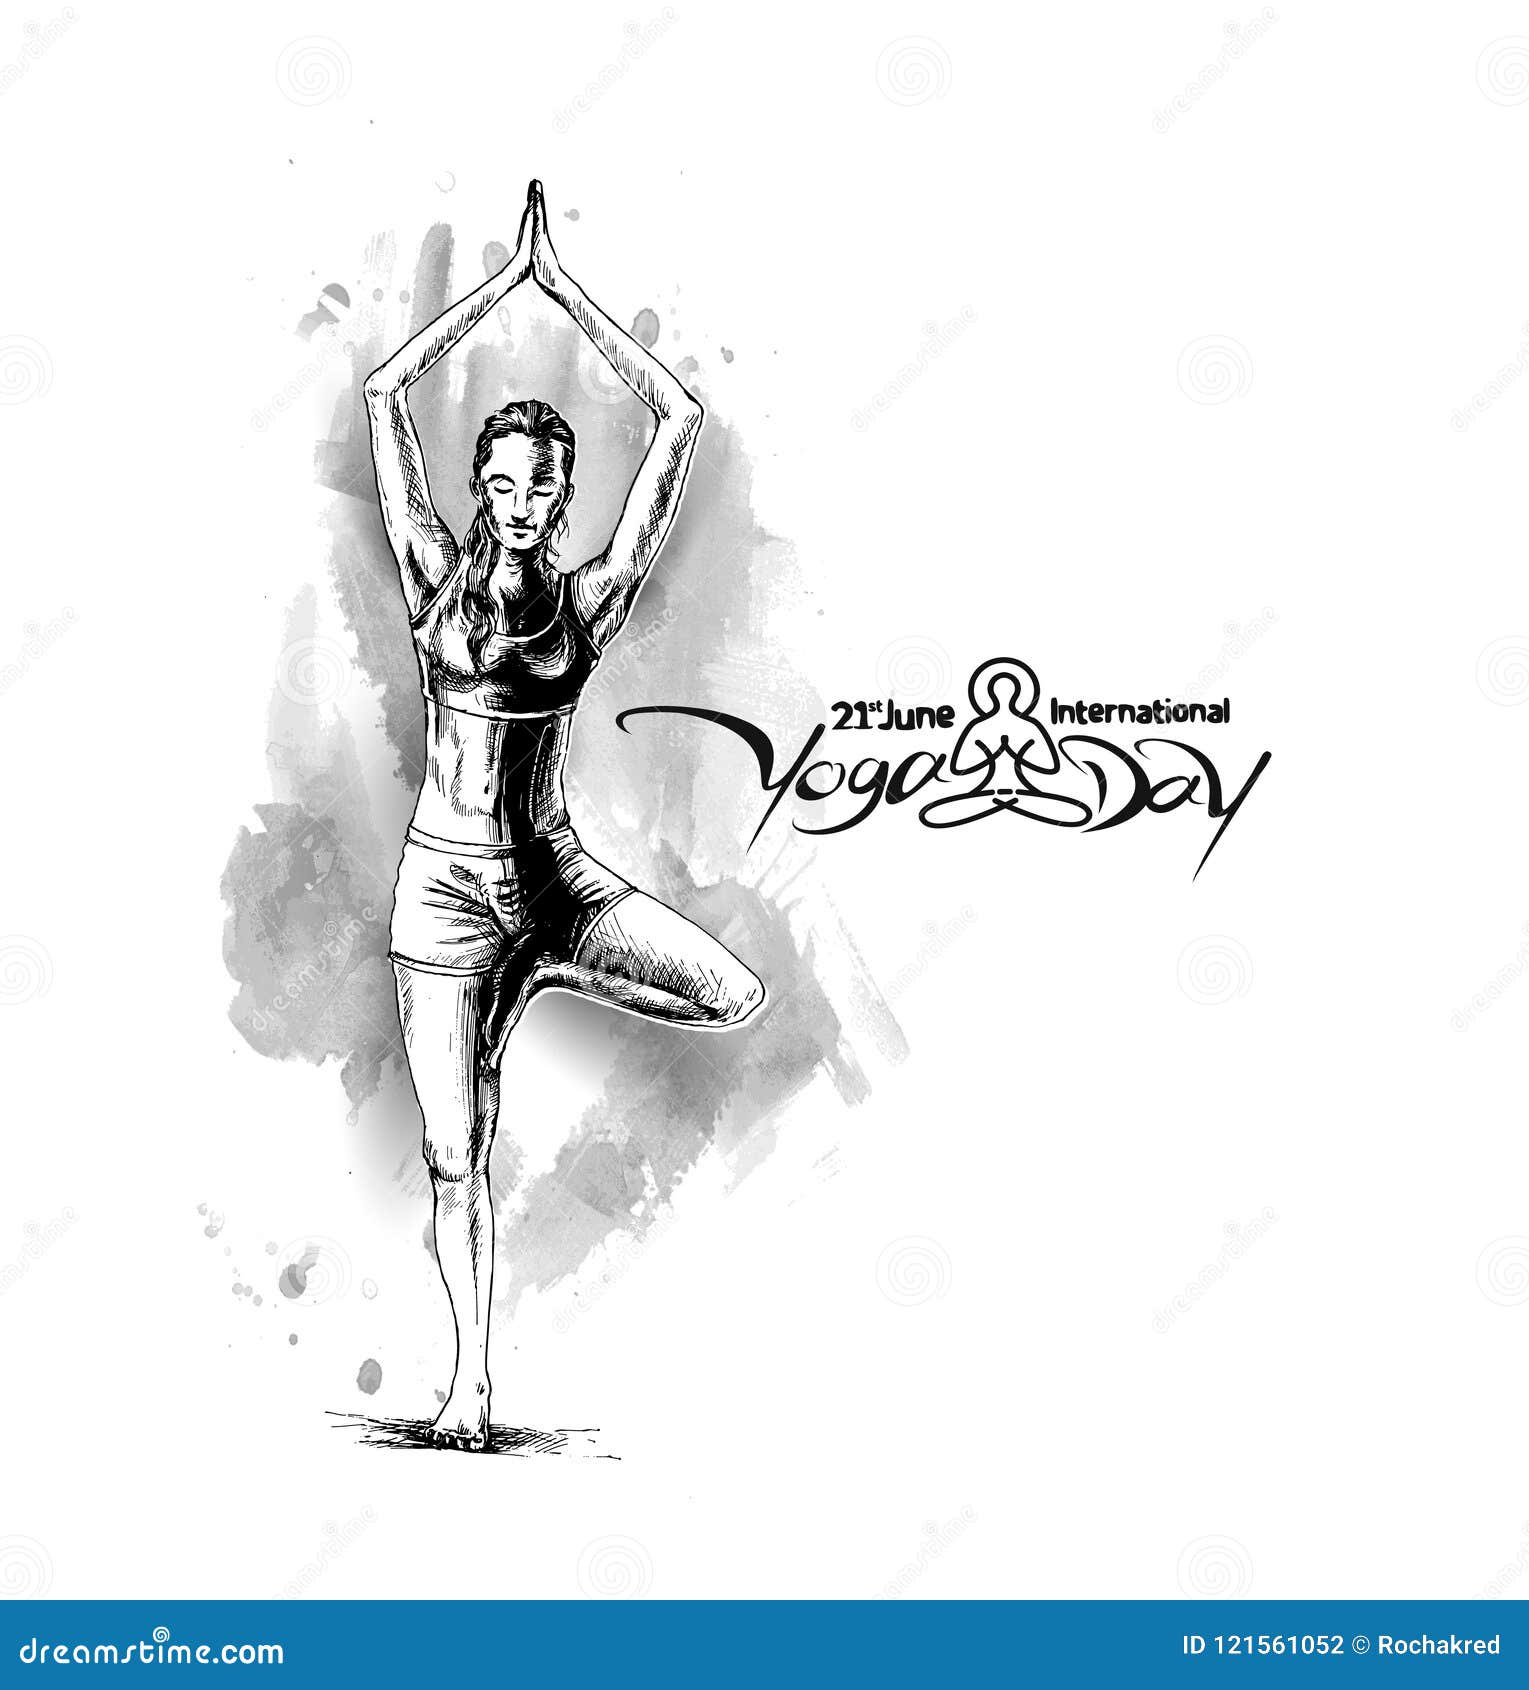 Share 149+ yoga day poster drawing latest - vietkidsiq.edu.vn